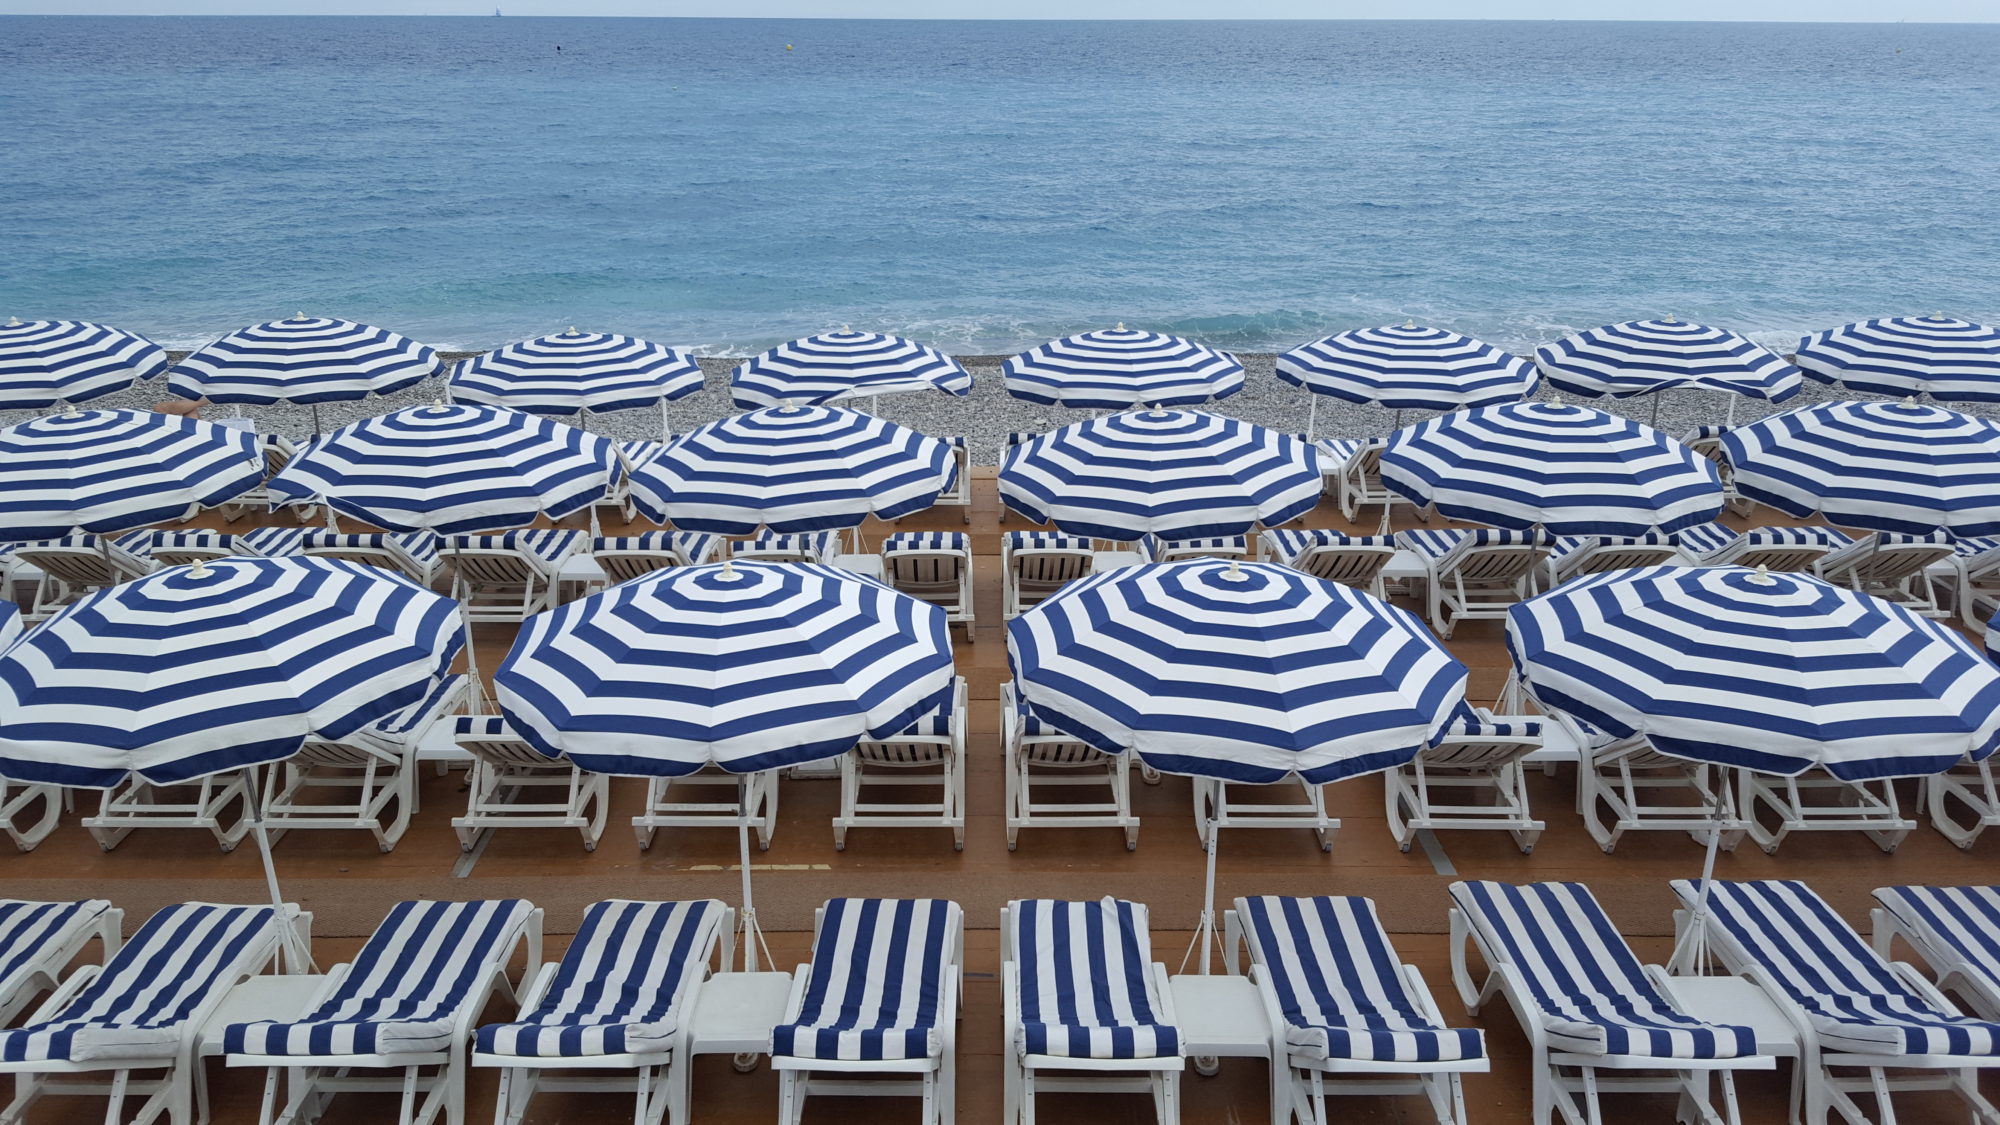 Umbrellas on a beach in Nice